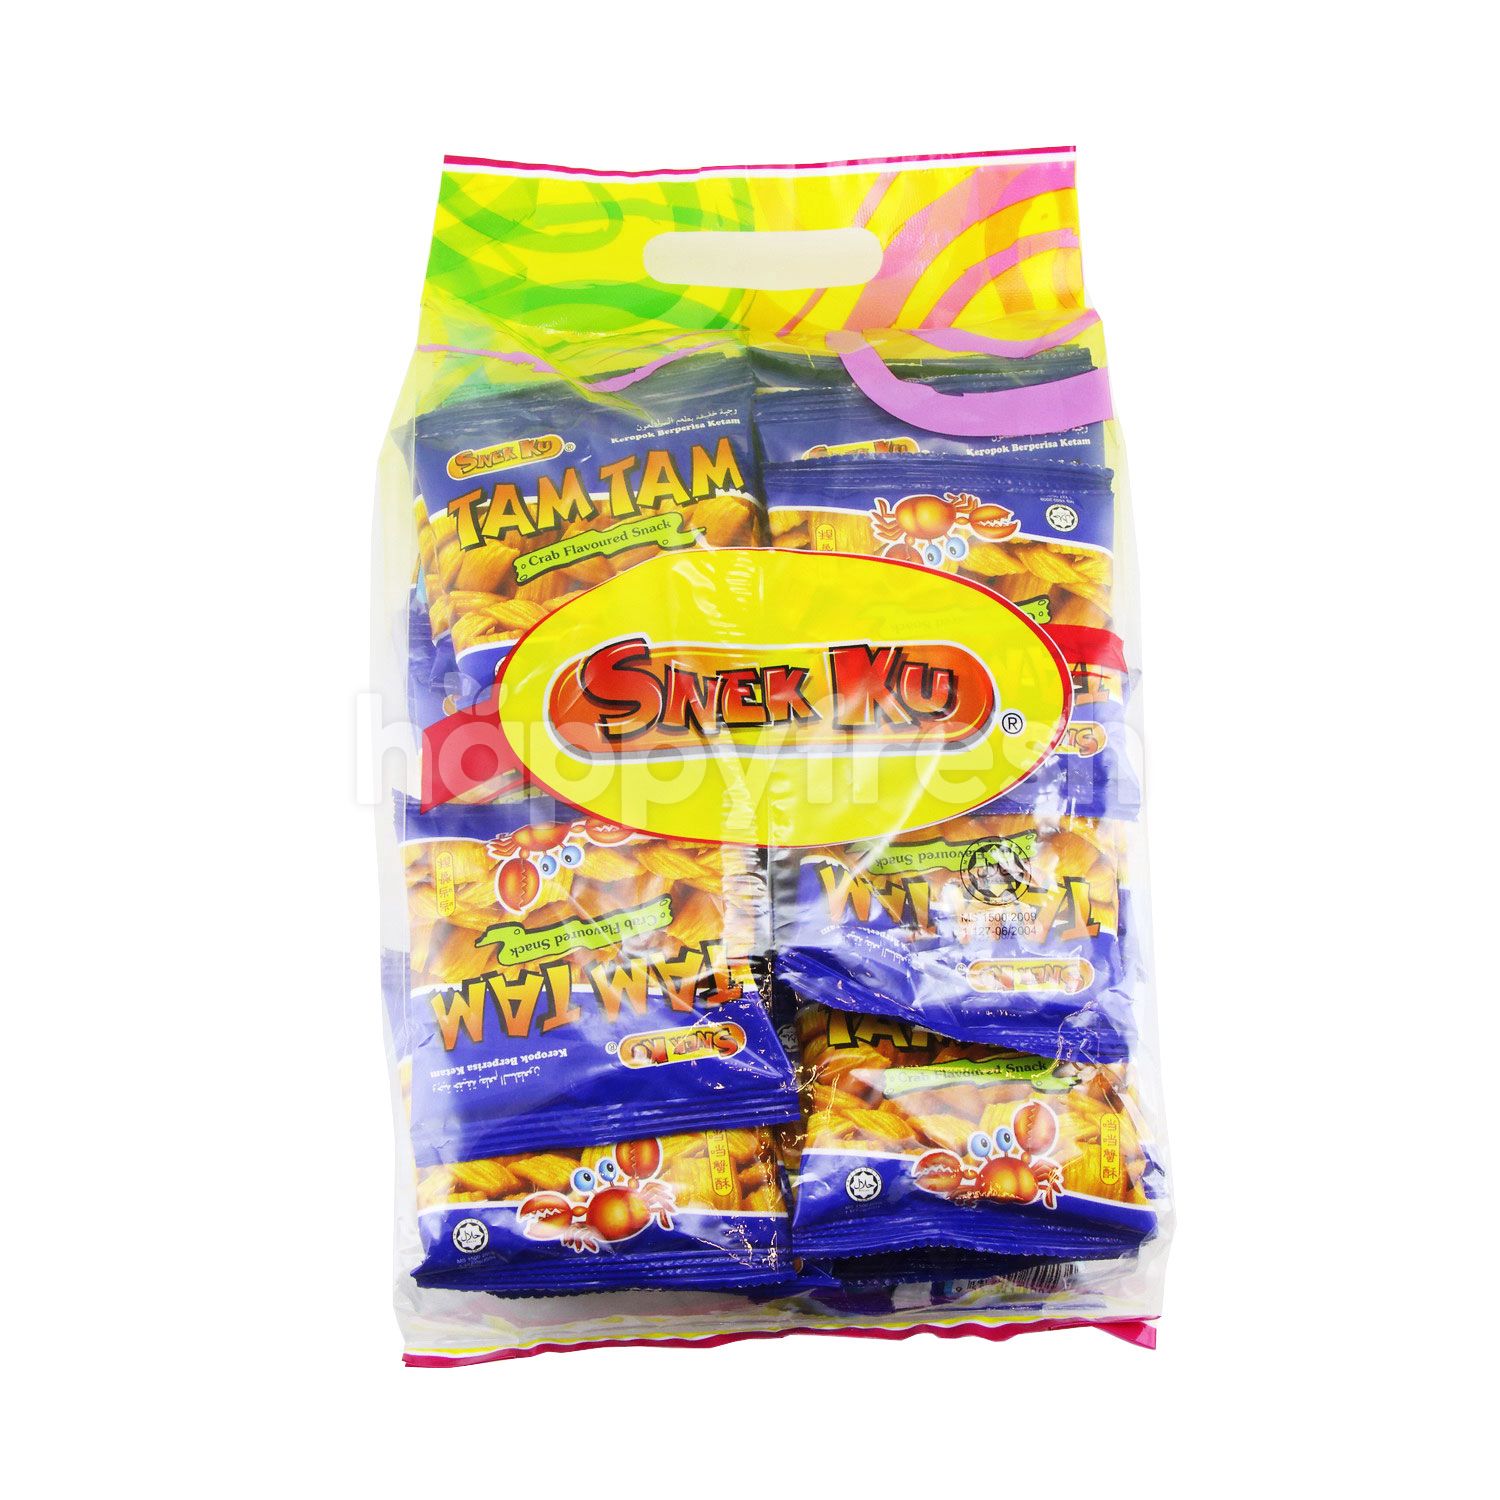 Beli SNEK KU Tam Tam 25 Packs dari Giant Hypermarket - HappyFresh